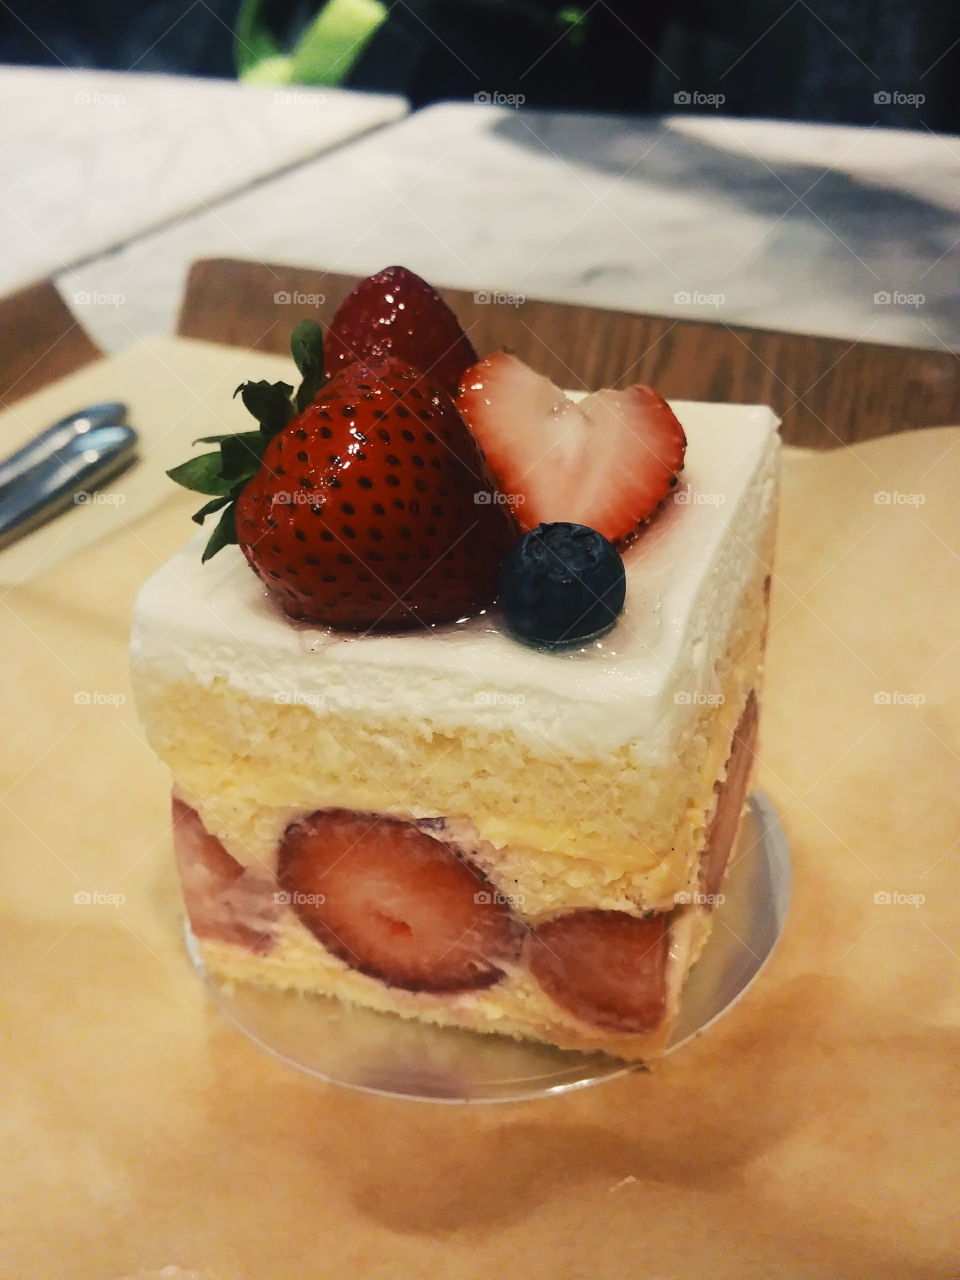 Strawberryshortcake!